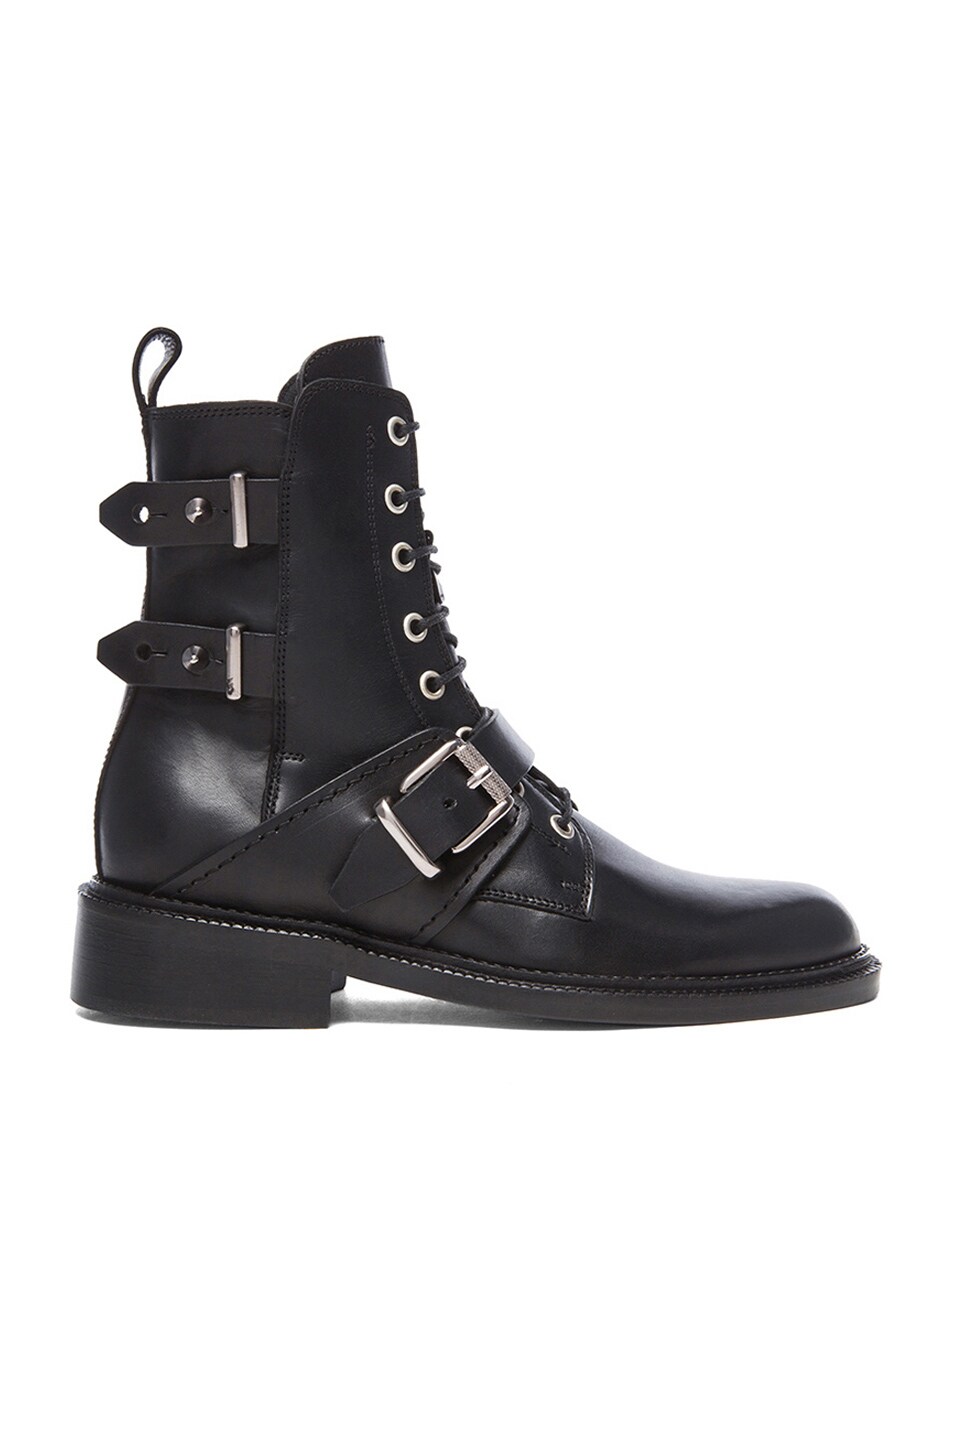 Barbara Bui Moto Leather Boots in Black | FWRD